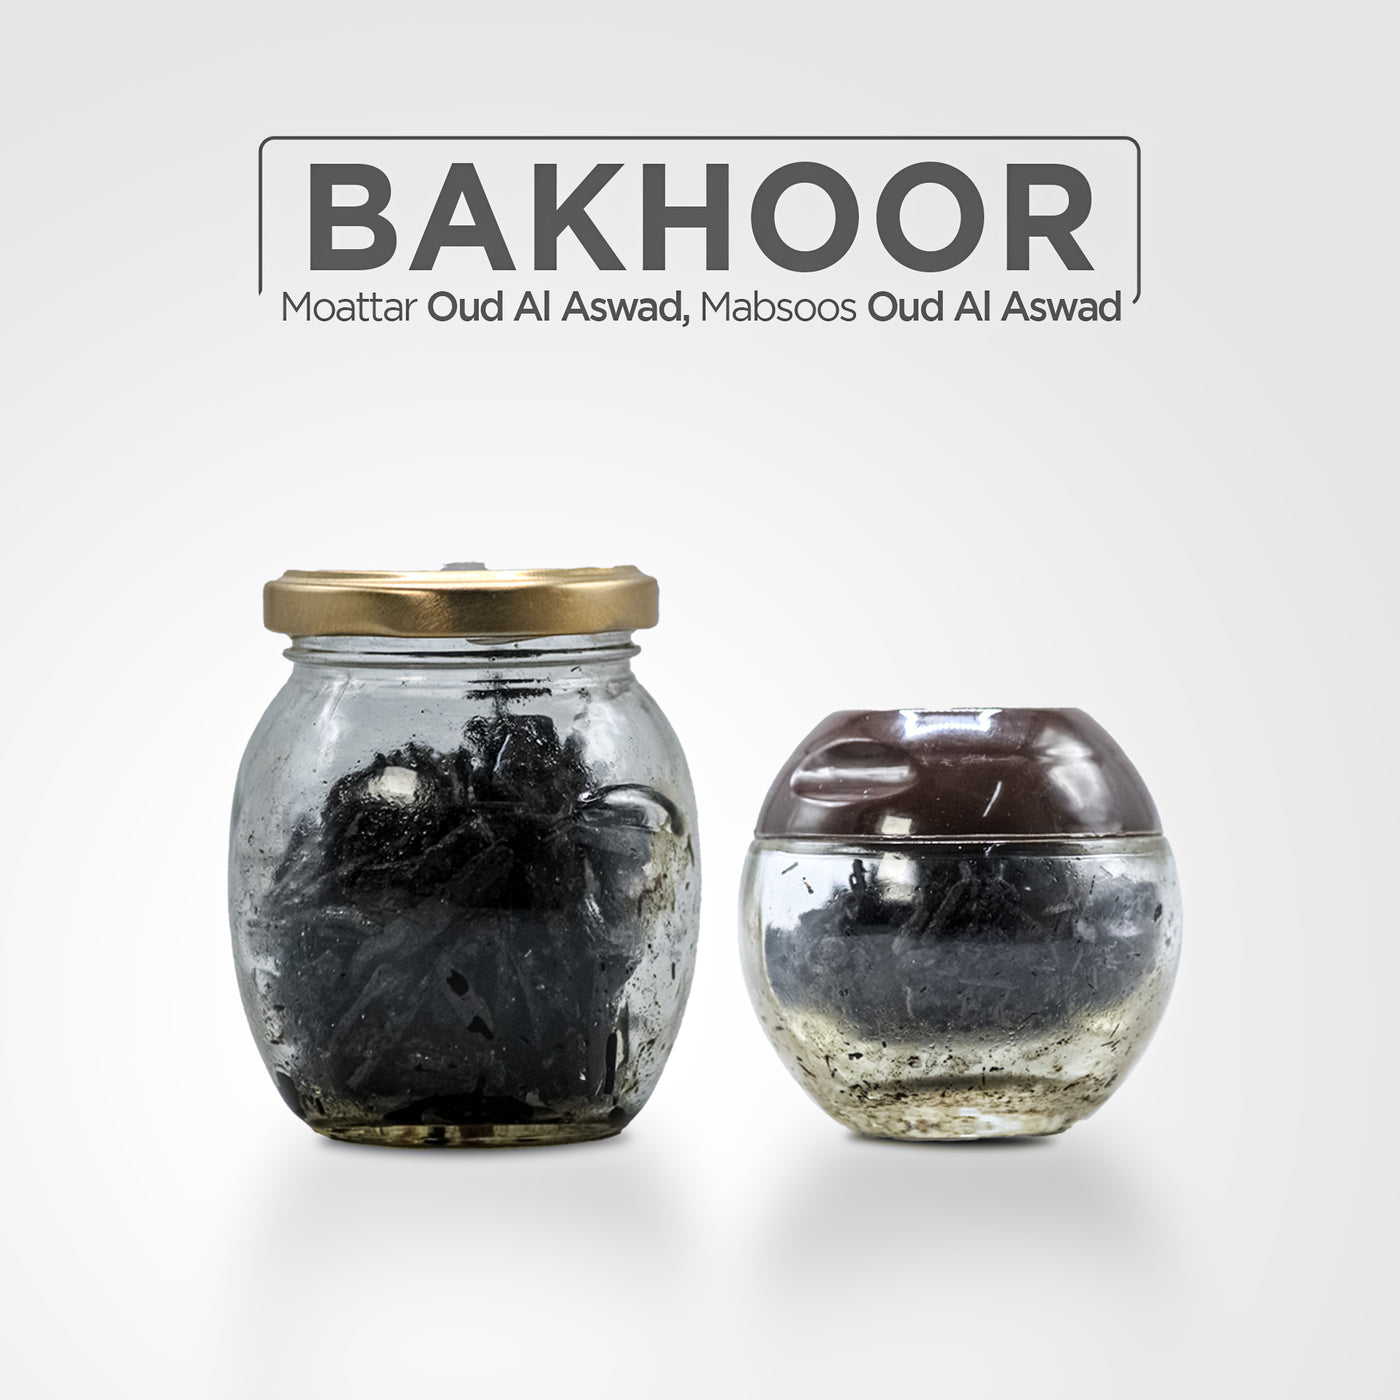 Bakhoor Premium Package